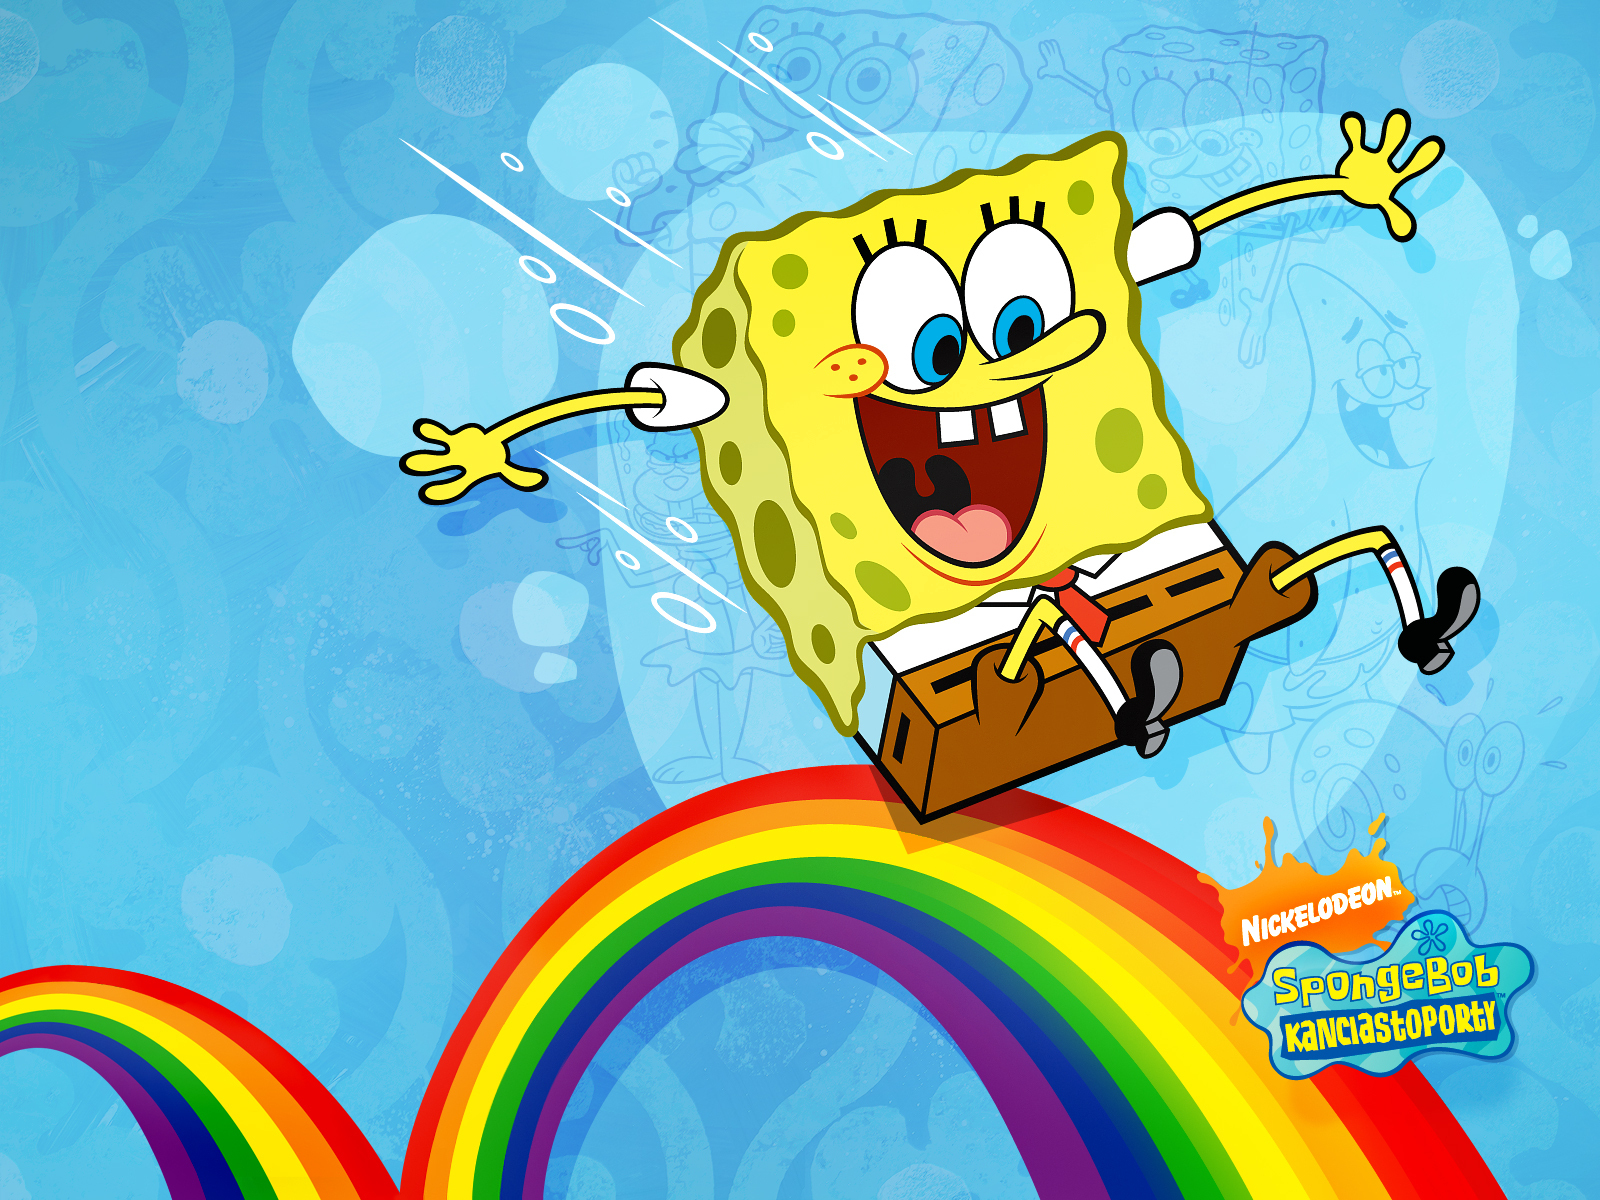 http://images2.fanpop.com/image/photos/11500000/Rainbow-spongebob-squarepants-11560367-1600-1200.jpg